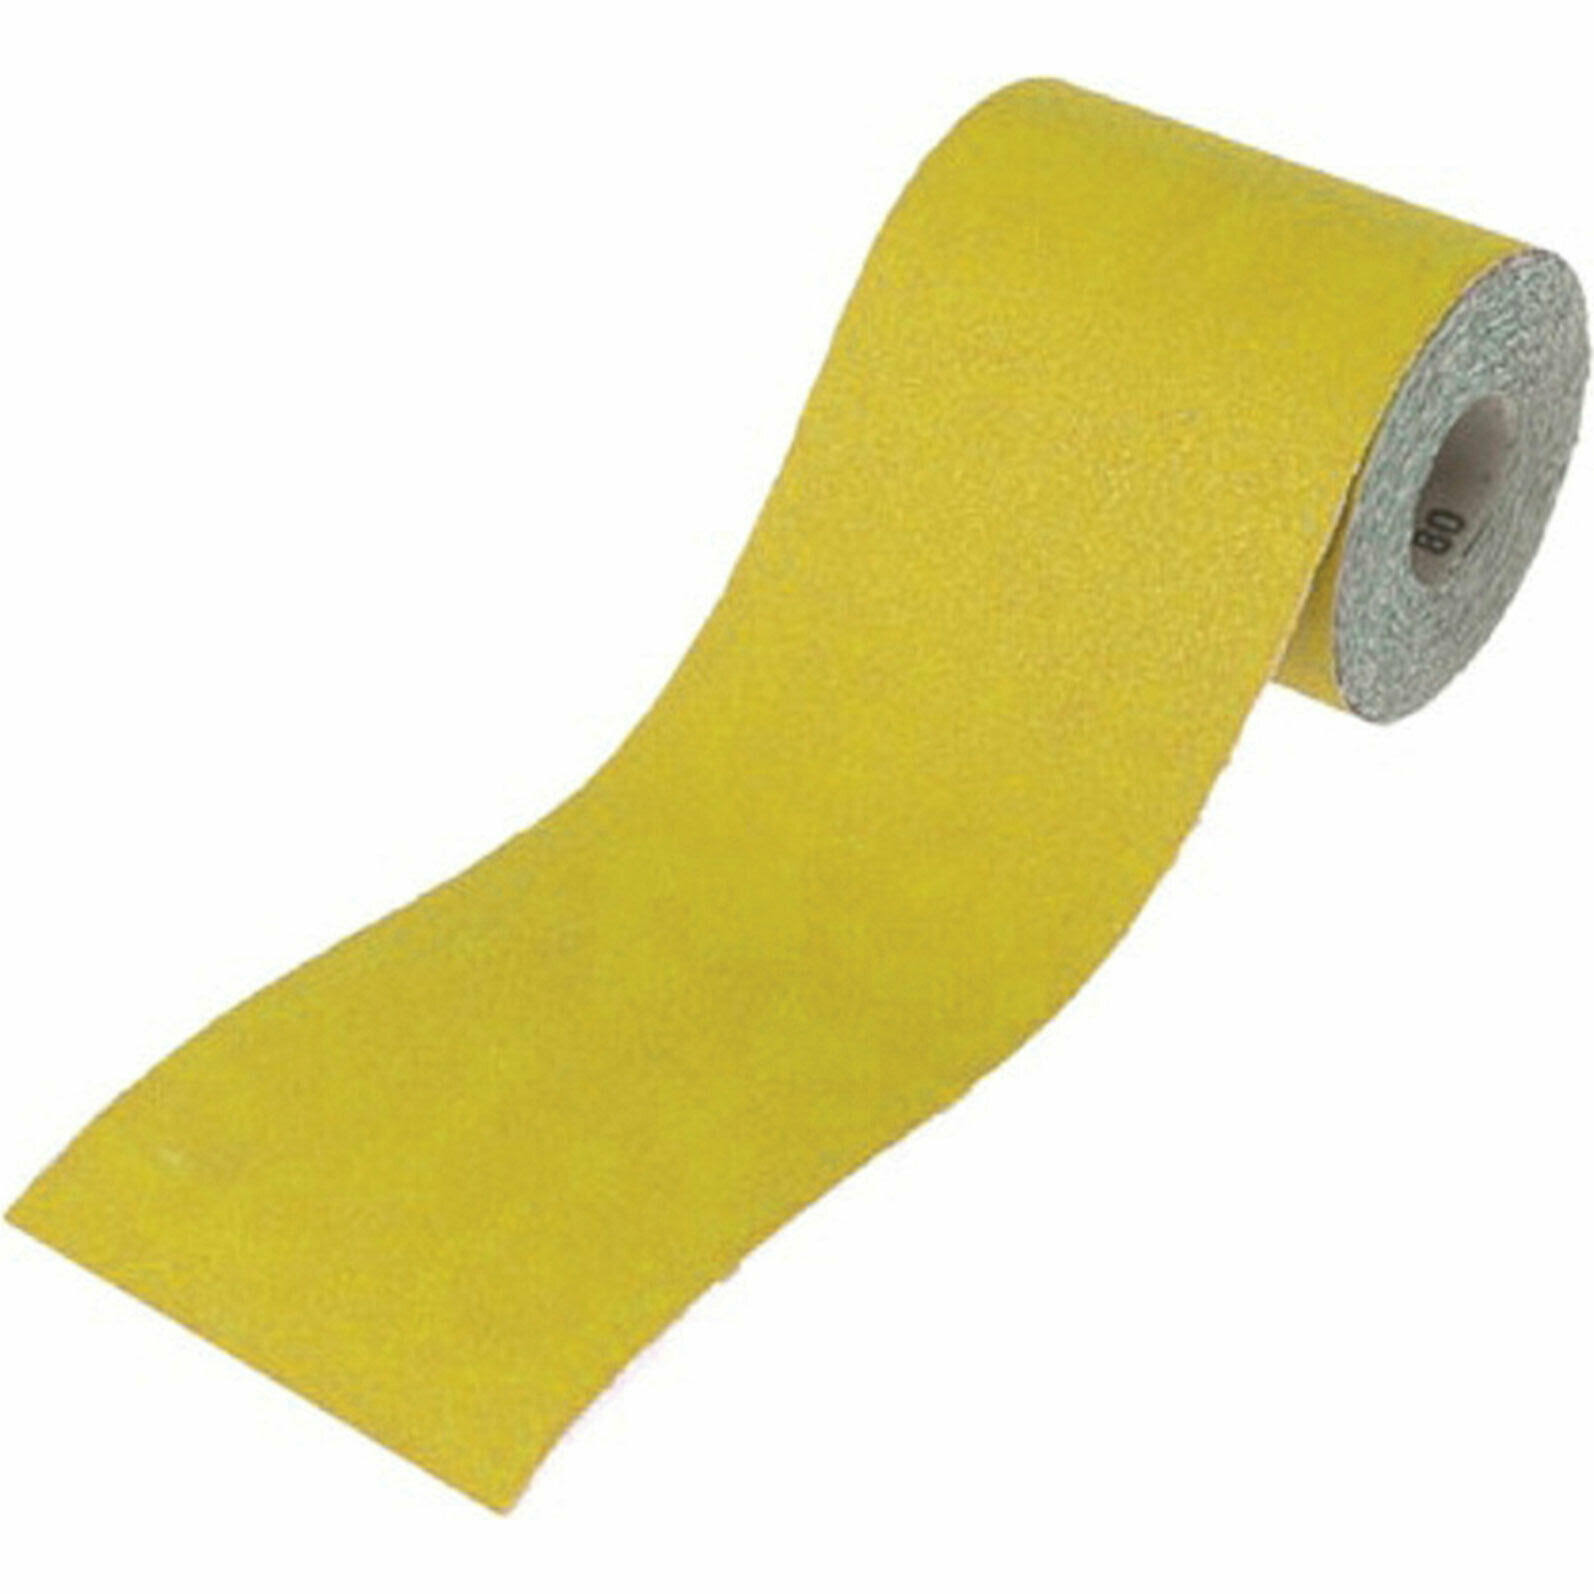 Faithfull - Aluminium Oxide Sanding Paper Roll Yellow 115mm x 10m 120g